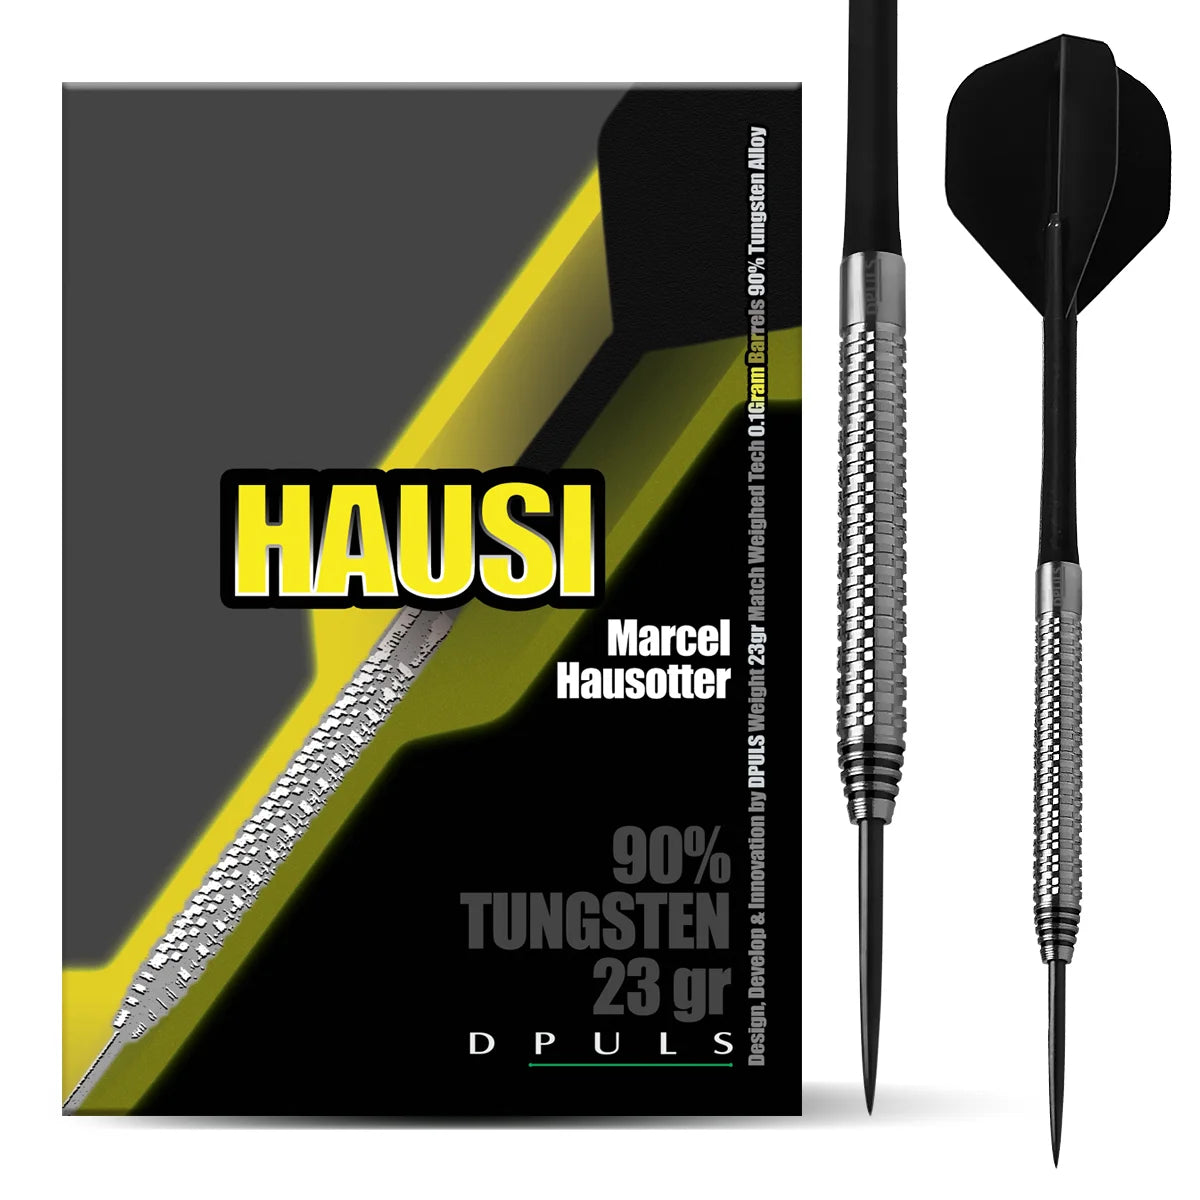 DPULS Hausi Steel Darts 23g/90%